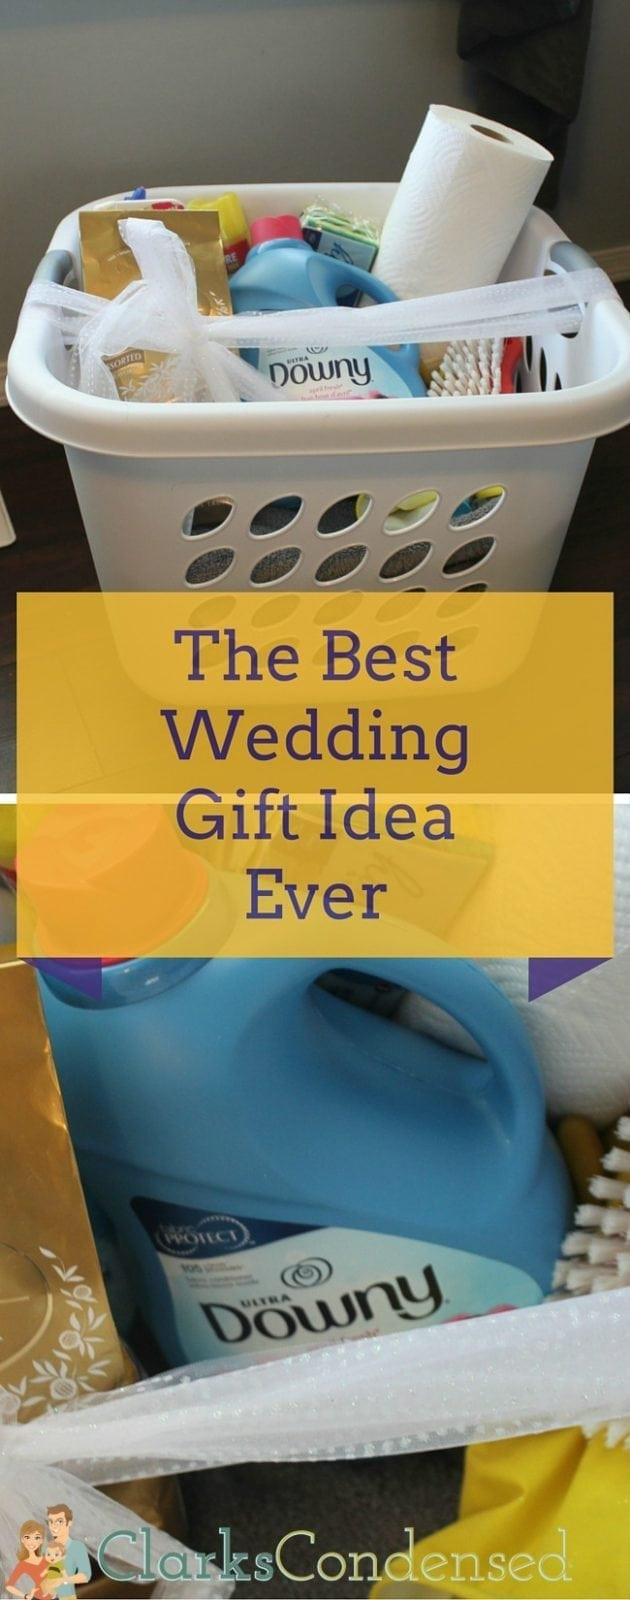 Best Gift Ideas Ever
 The Best Wedding Gift Idea Ever